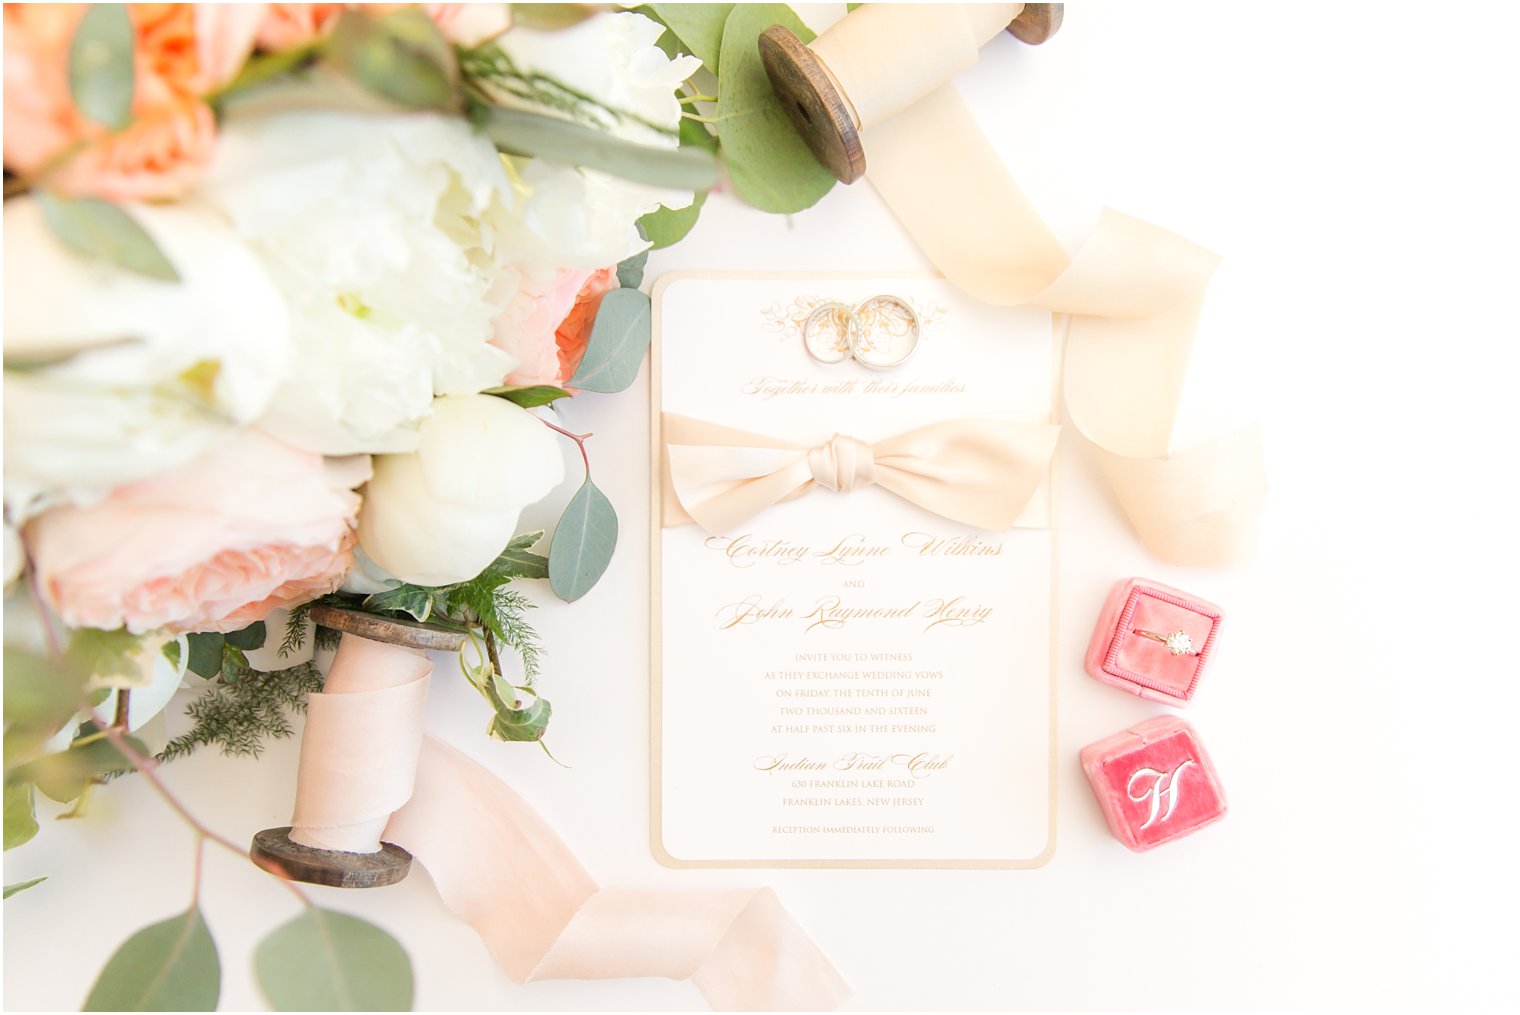 Wedding invitation for classic blush wedding | Photos by Indian Trail Club Wedding Photographer Idalia Photography